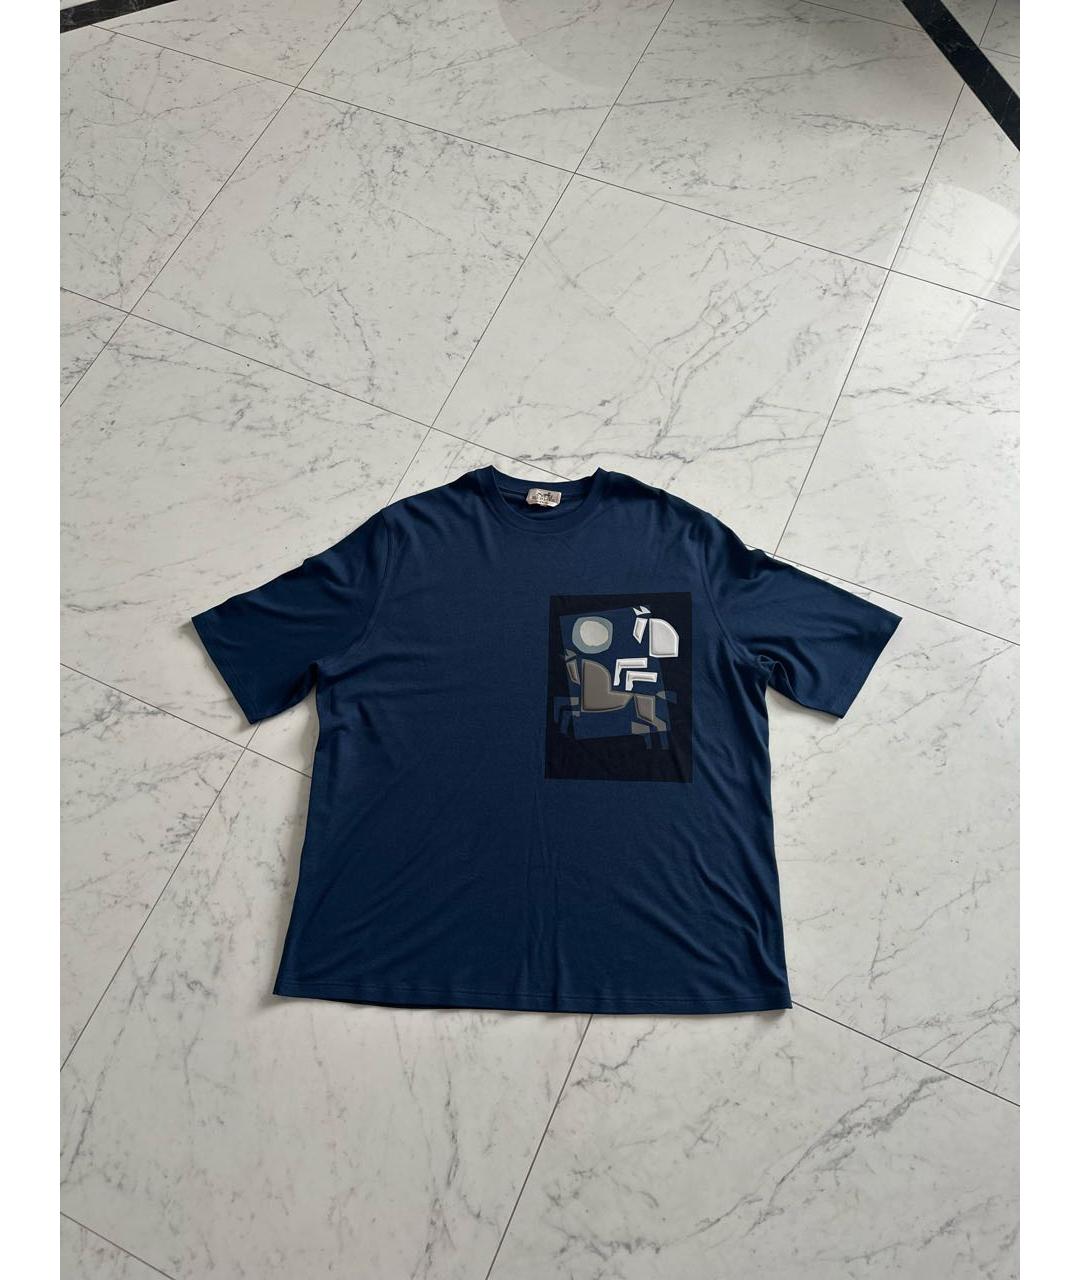 HERMES Синяя хлопковая футболка, фото 3